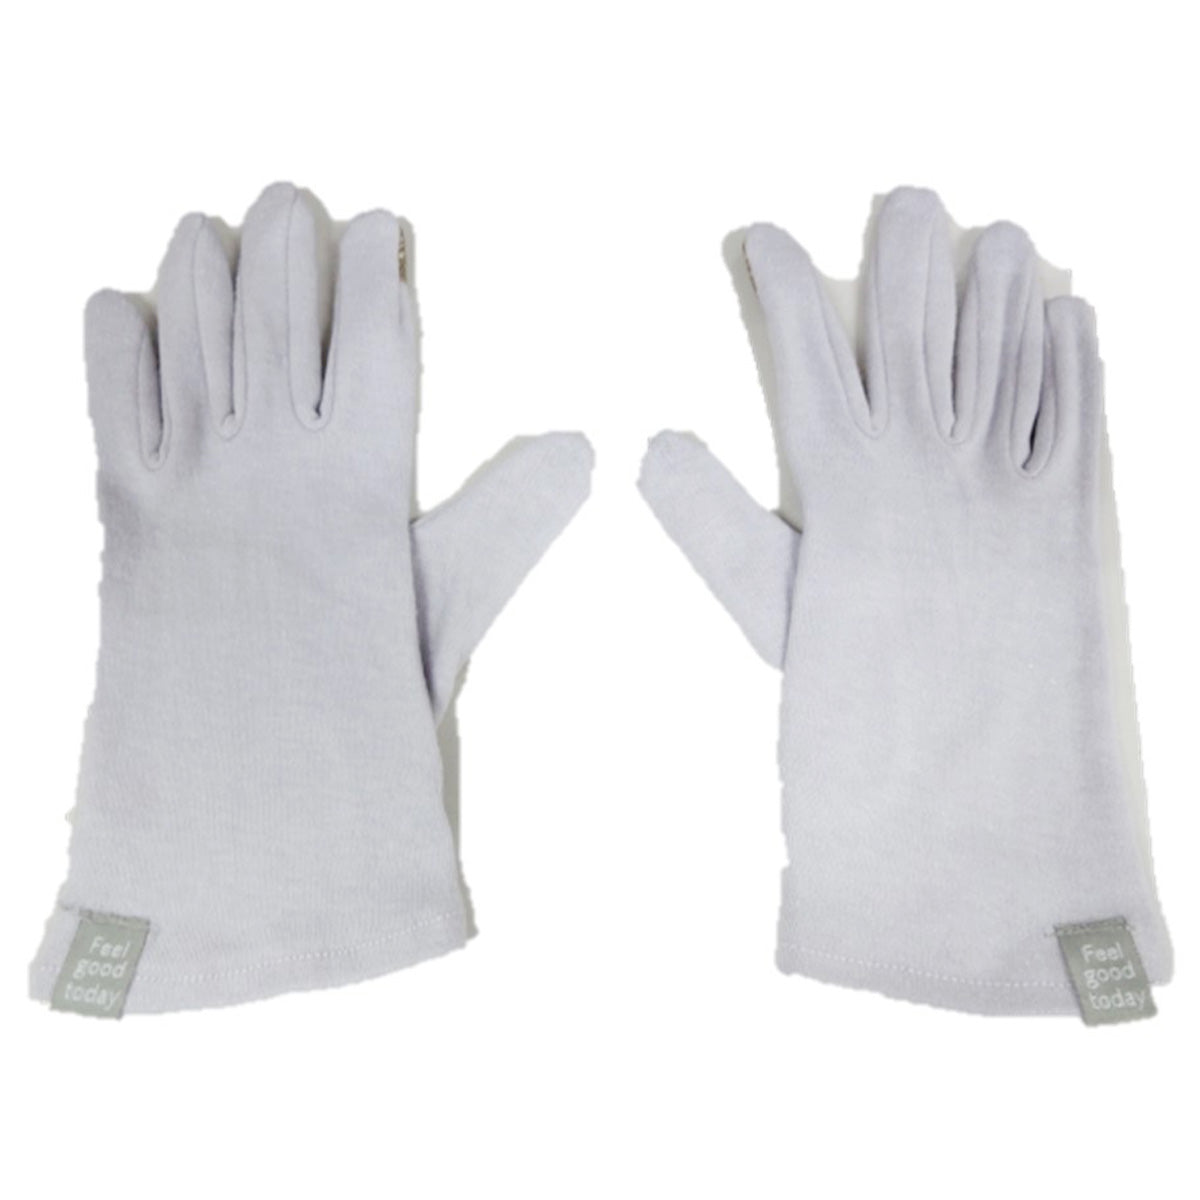 【OUTLET】保湿用グローブ 手袋 乾燥対策 ラベンダー 359655